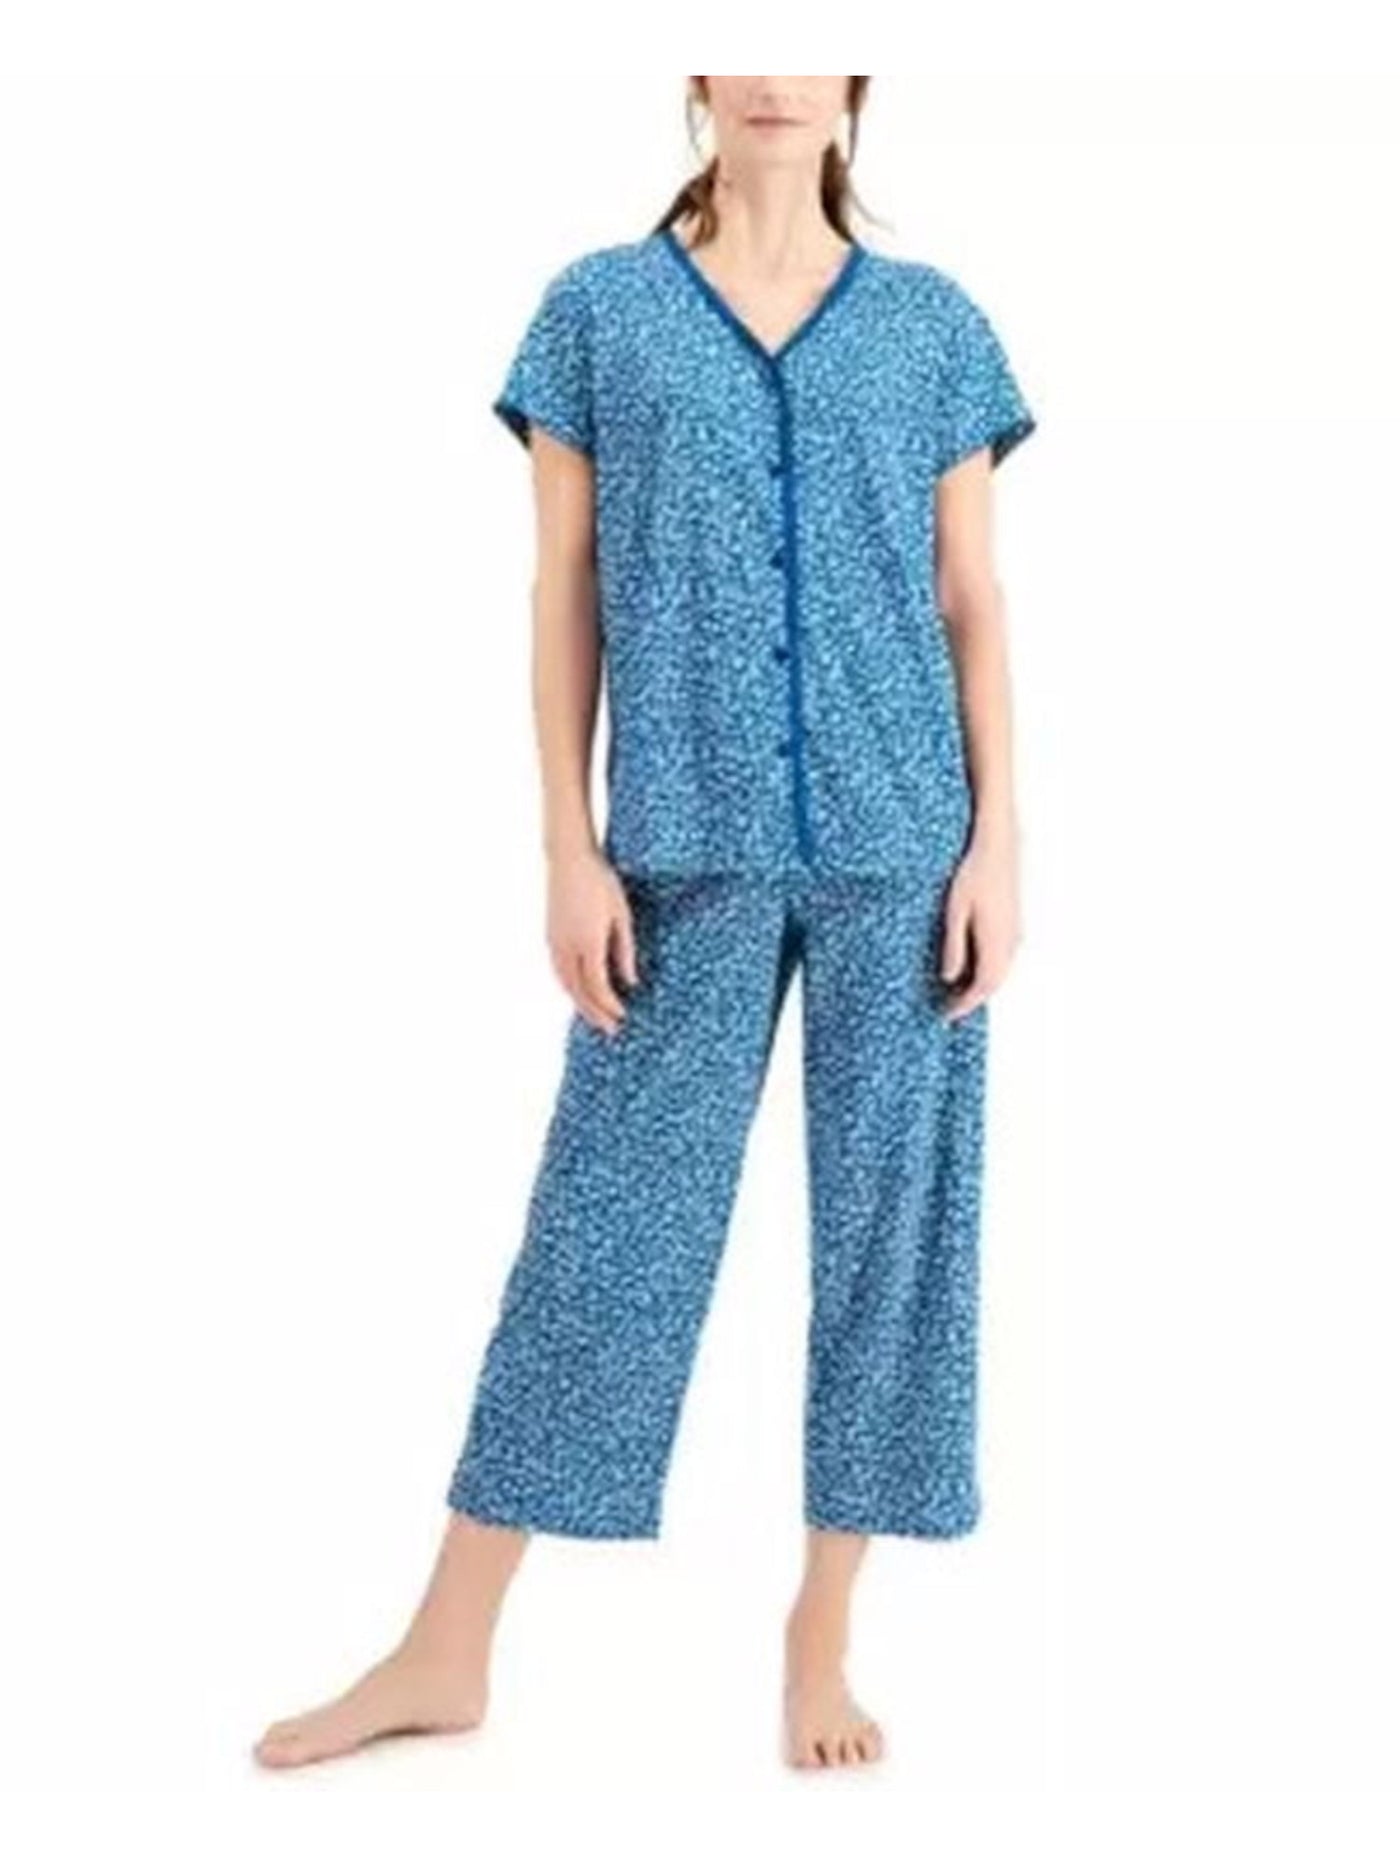 CHARTER CLUB Intimates Teal Scalloped Trim Floral Sleep Shirt Pajama Top S